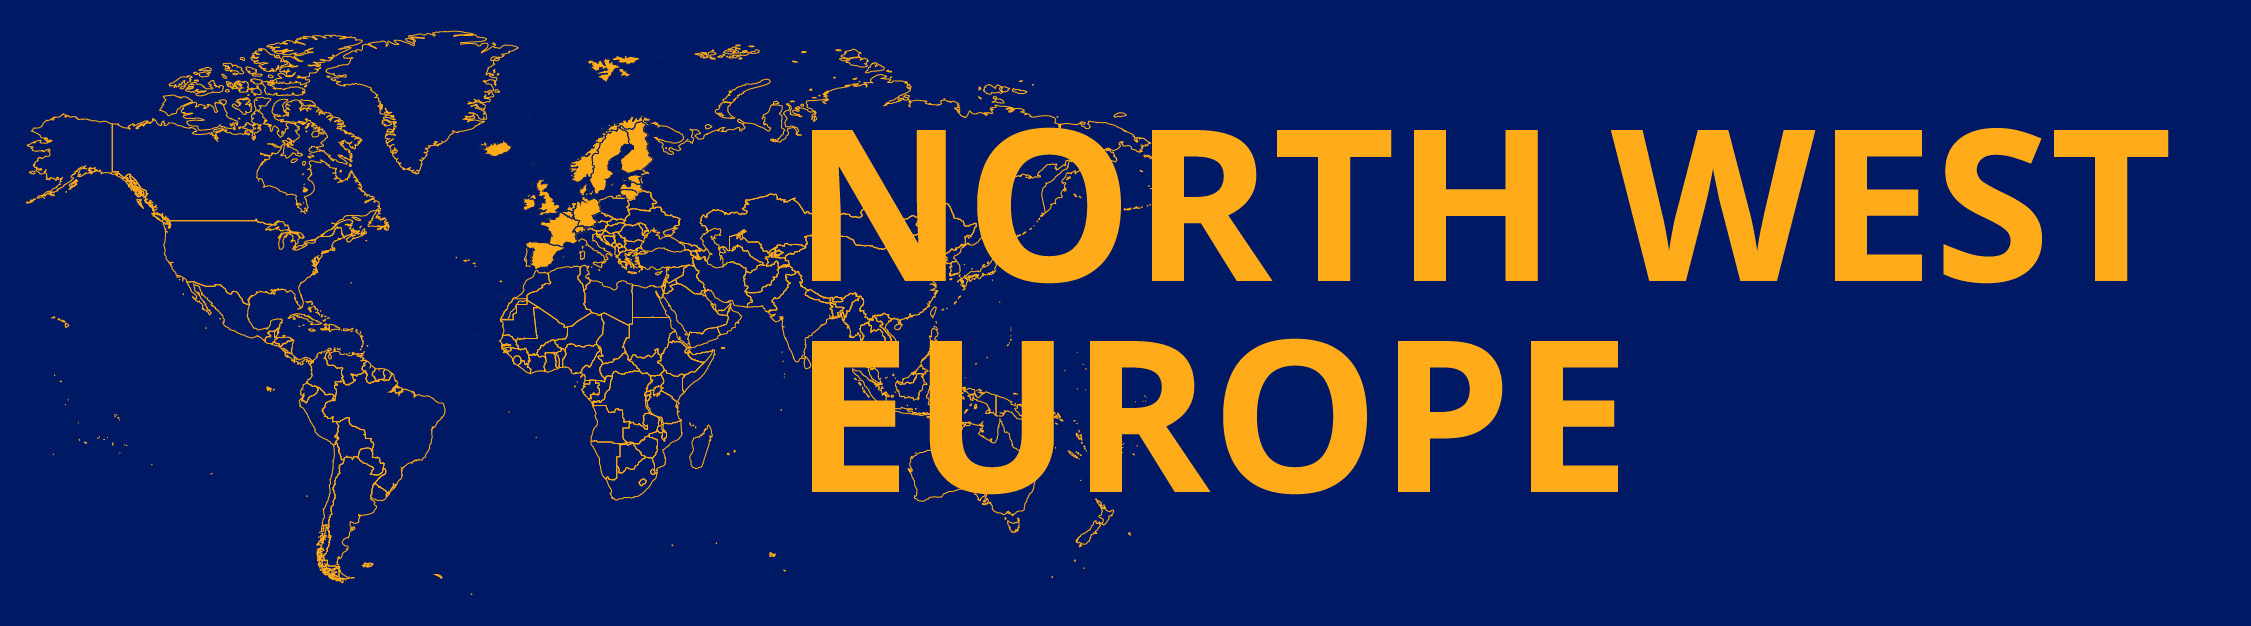 North West Europe